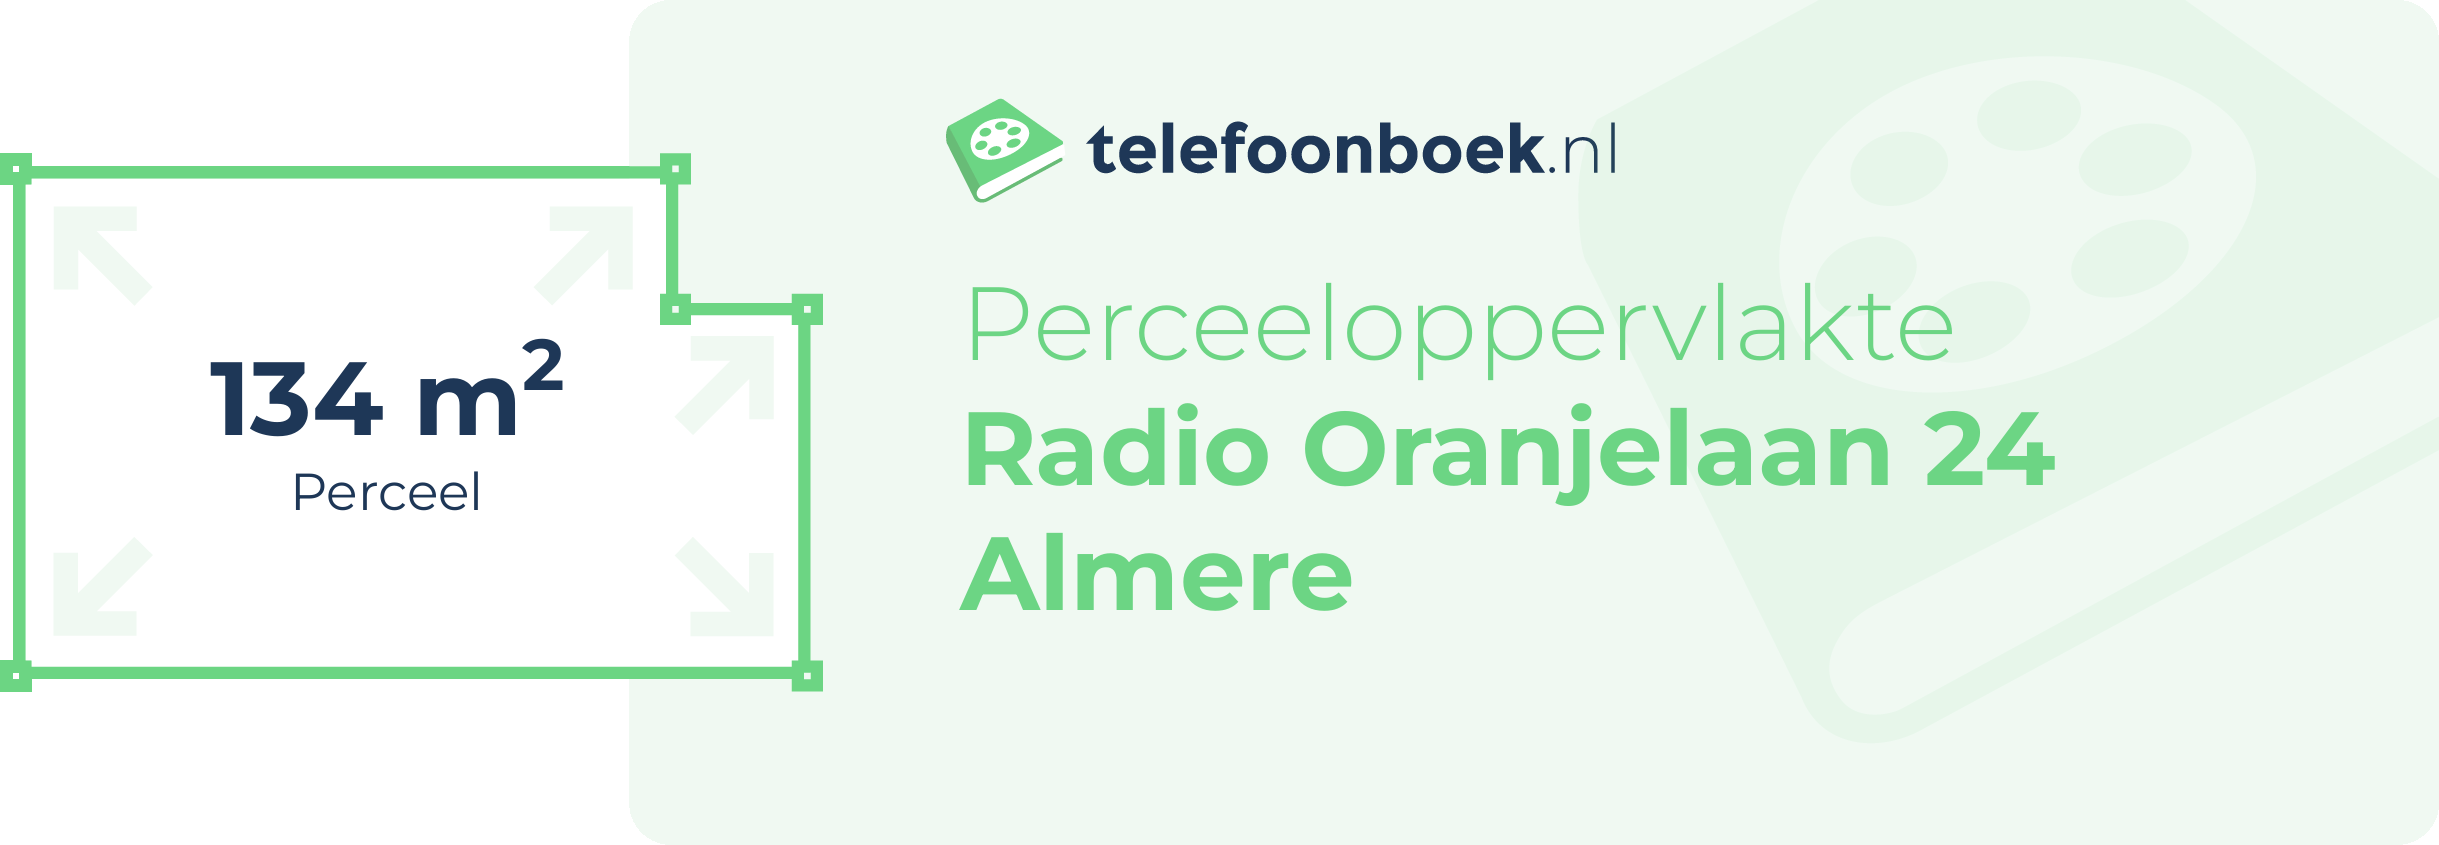 Perceeloppervlakte Radio Oranjelaan 24 Almere